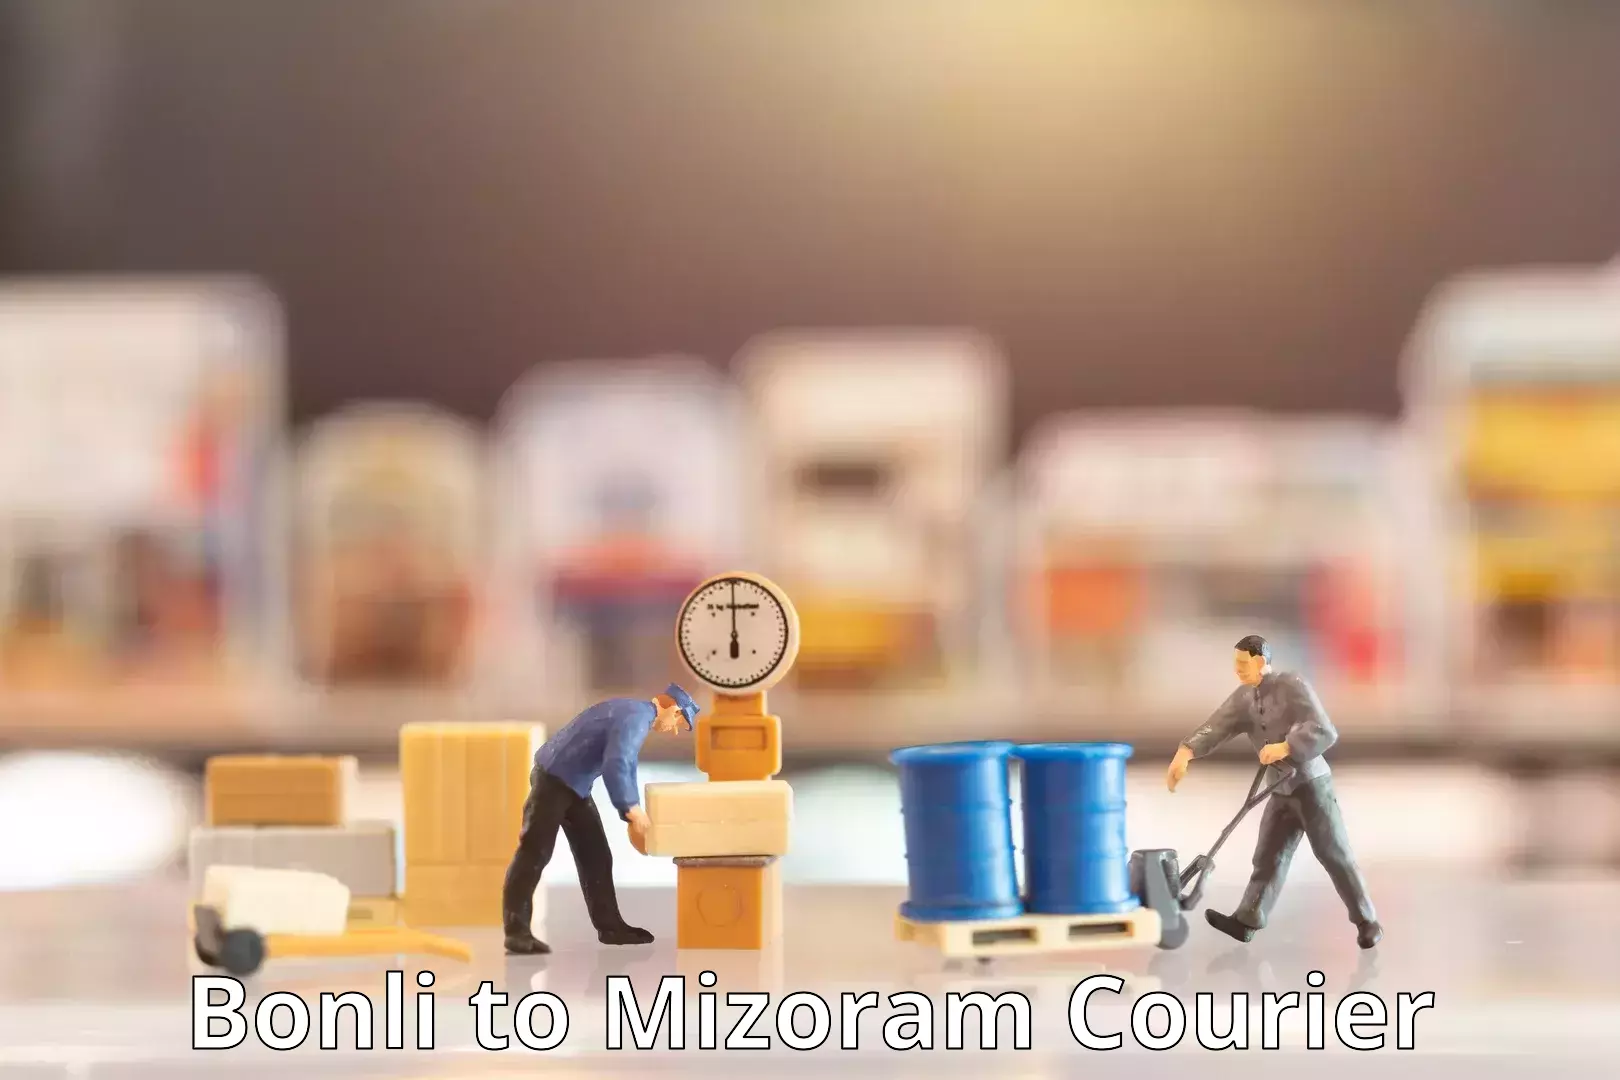 On-call courier service Bonli to Mizoram